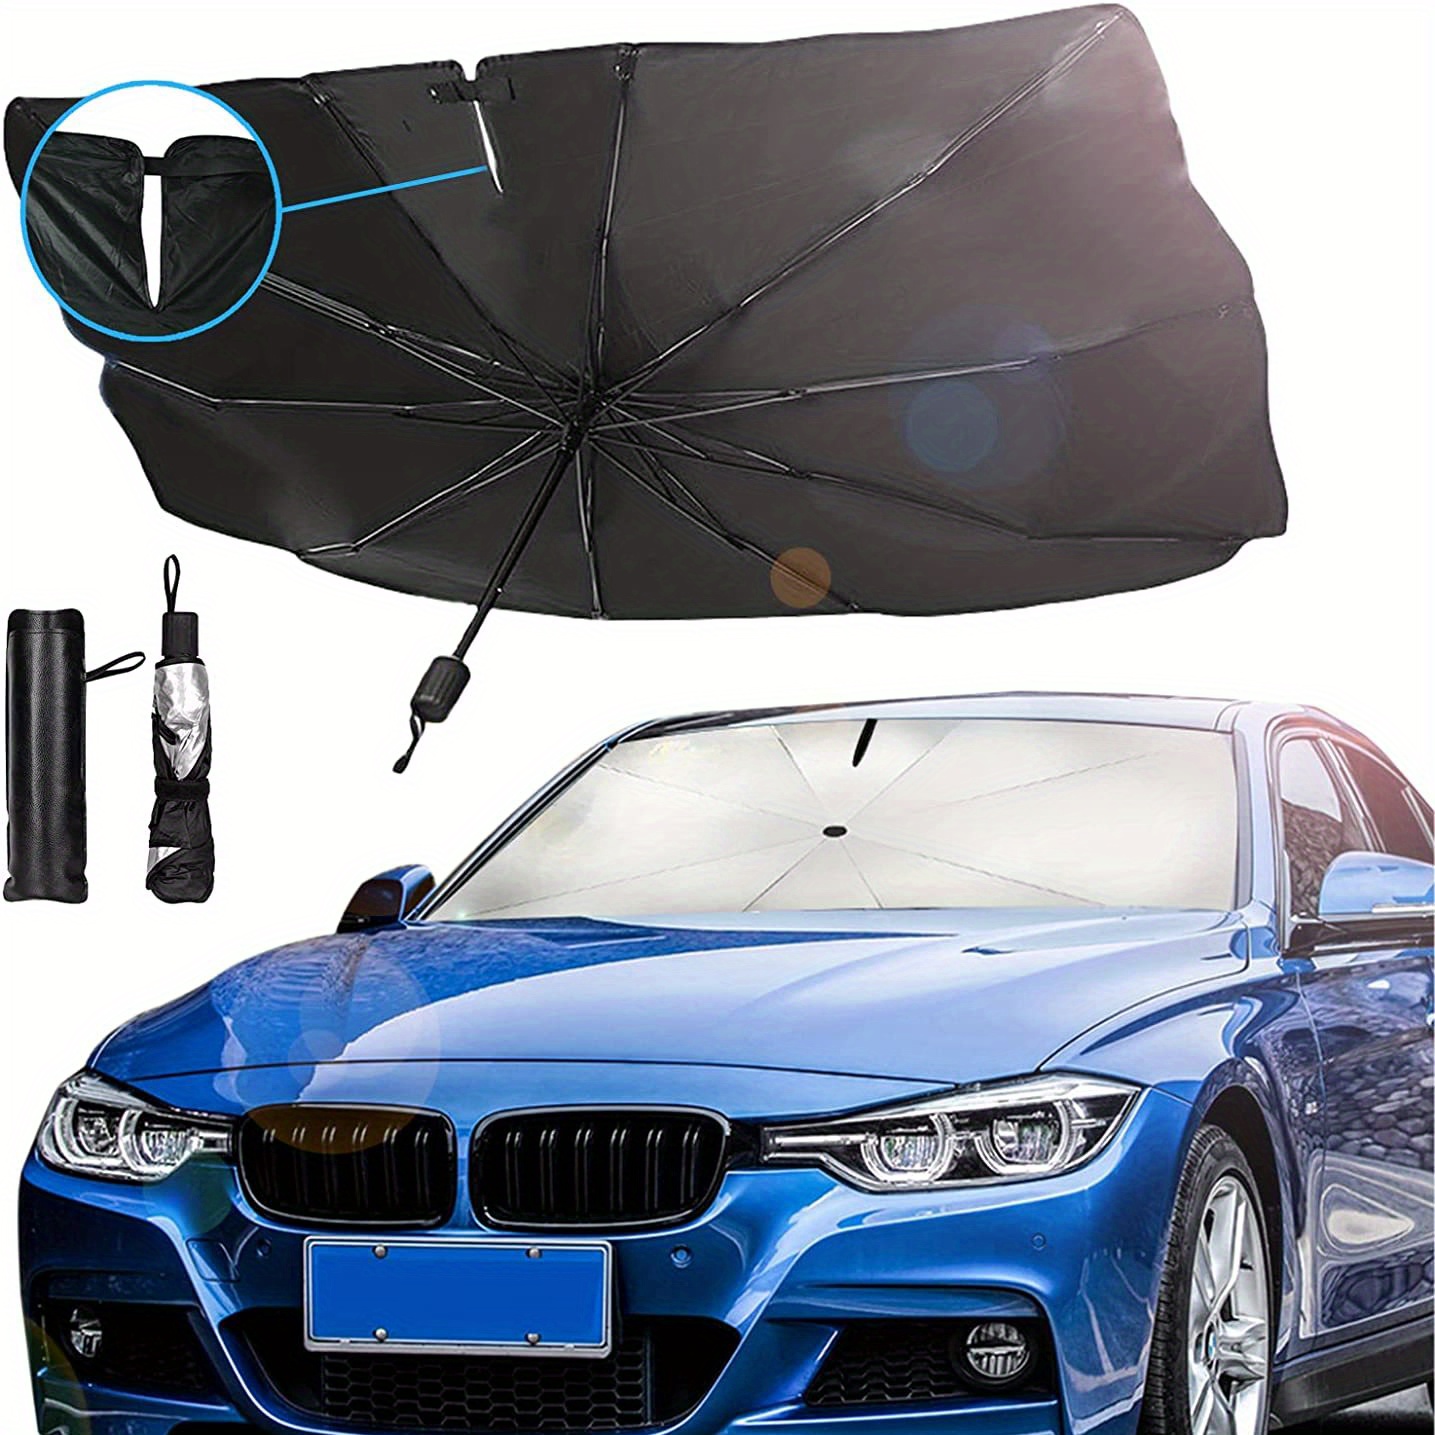 

Umbrella Windshield Sun Shade For Car Blocks Uv Rays Foldable Sun Visor For Automotive Interior Protection Front Car Window Shades Car Accessories